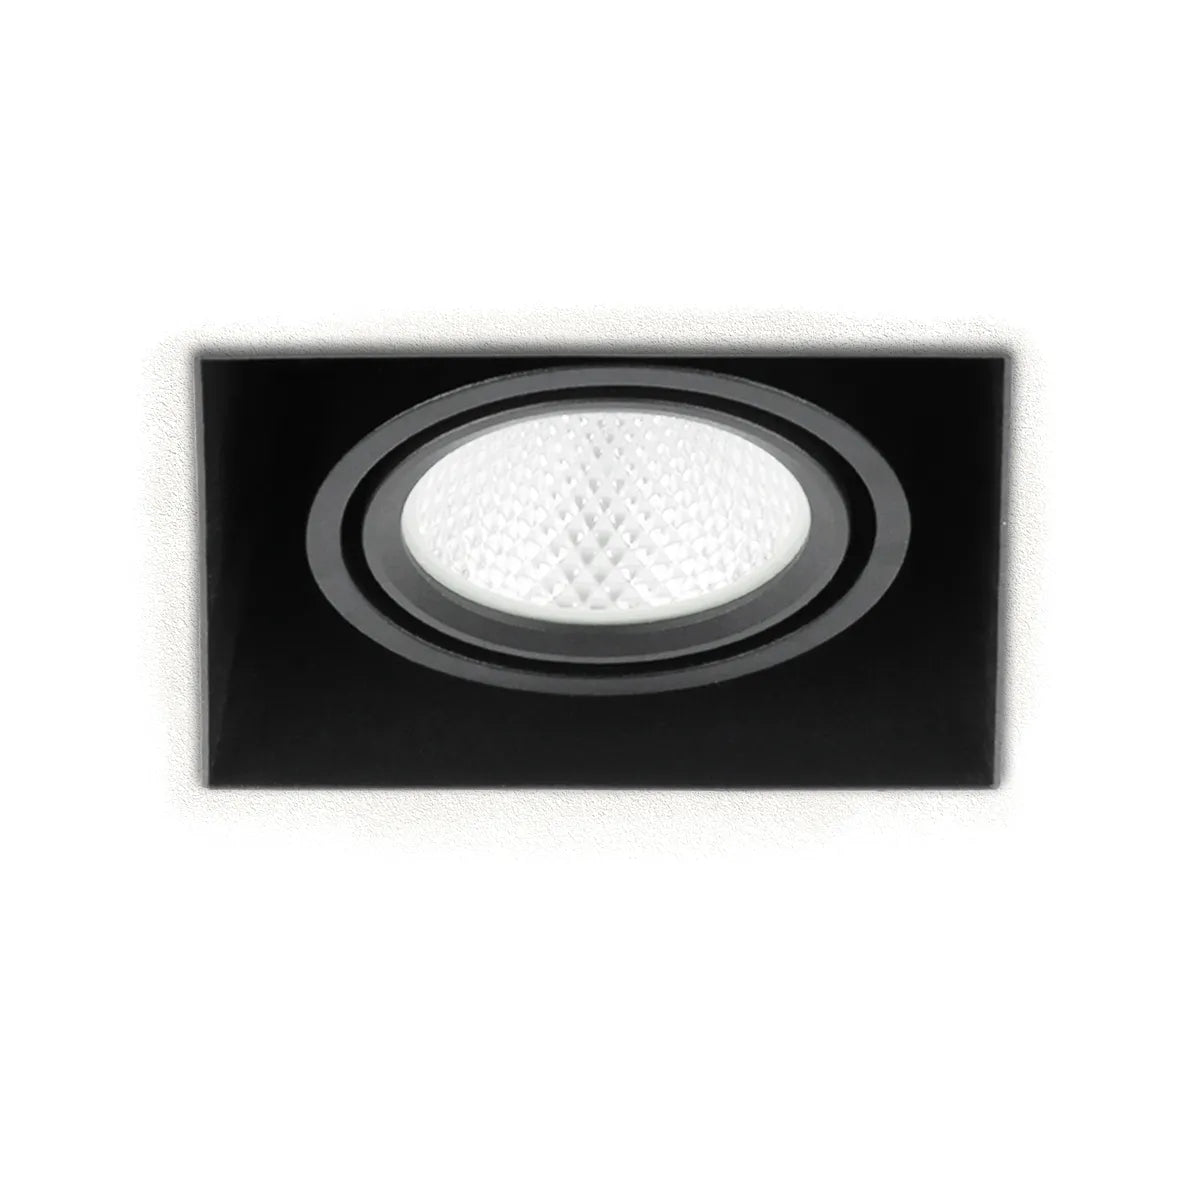 Zwarte LED Inbouwspot 6W Trimless 3000K warm wit vierkant 89x89mm kantelbaar draaibaar